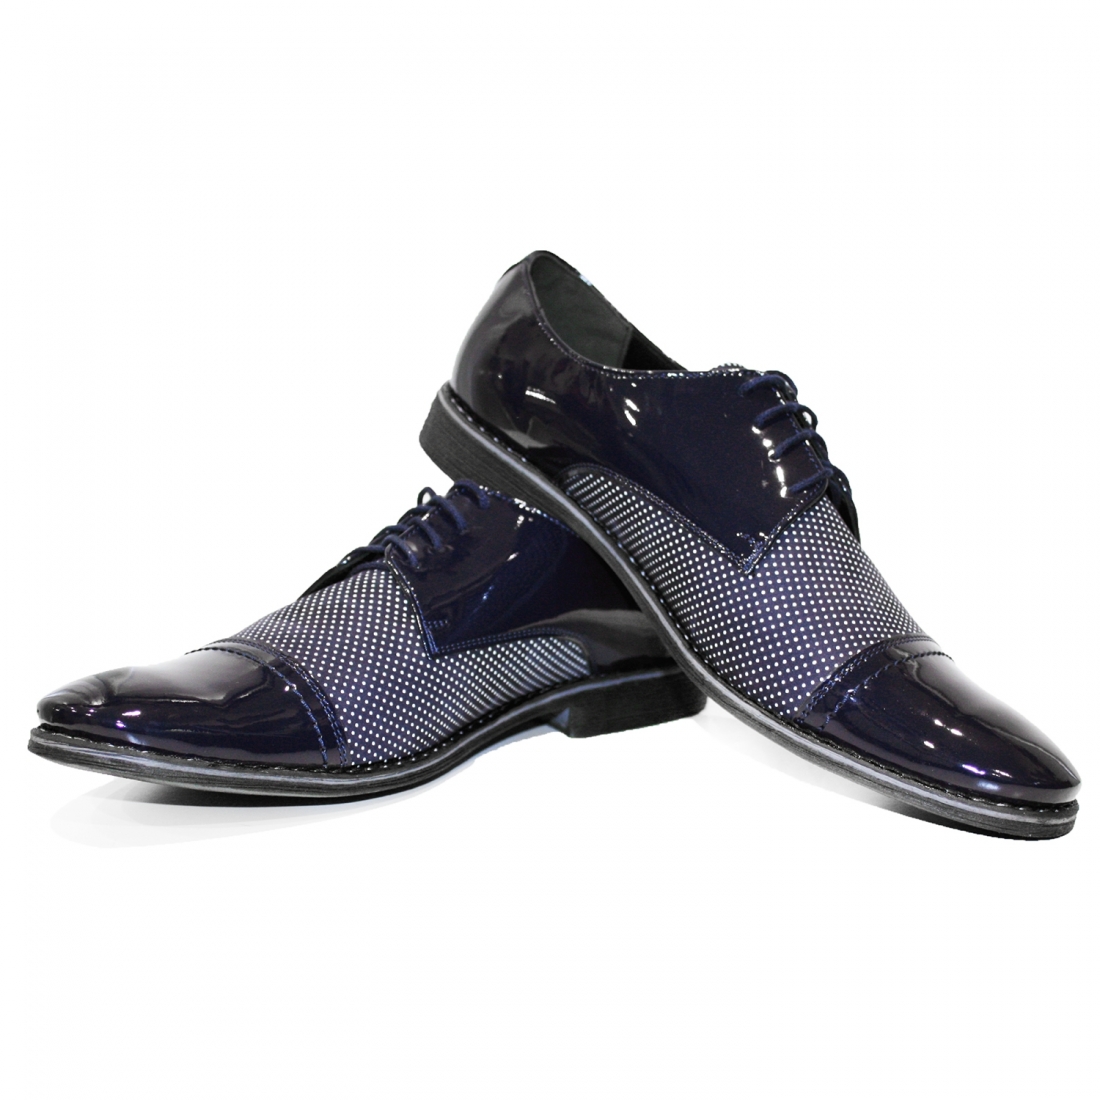 Modello Croppero - Chaussure Classique - Handmade Colorful Italian Leather Shoes